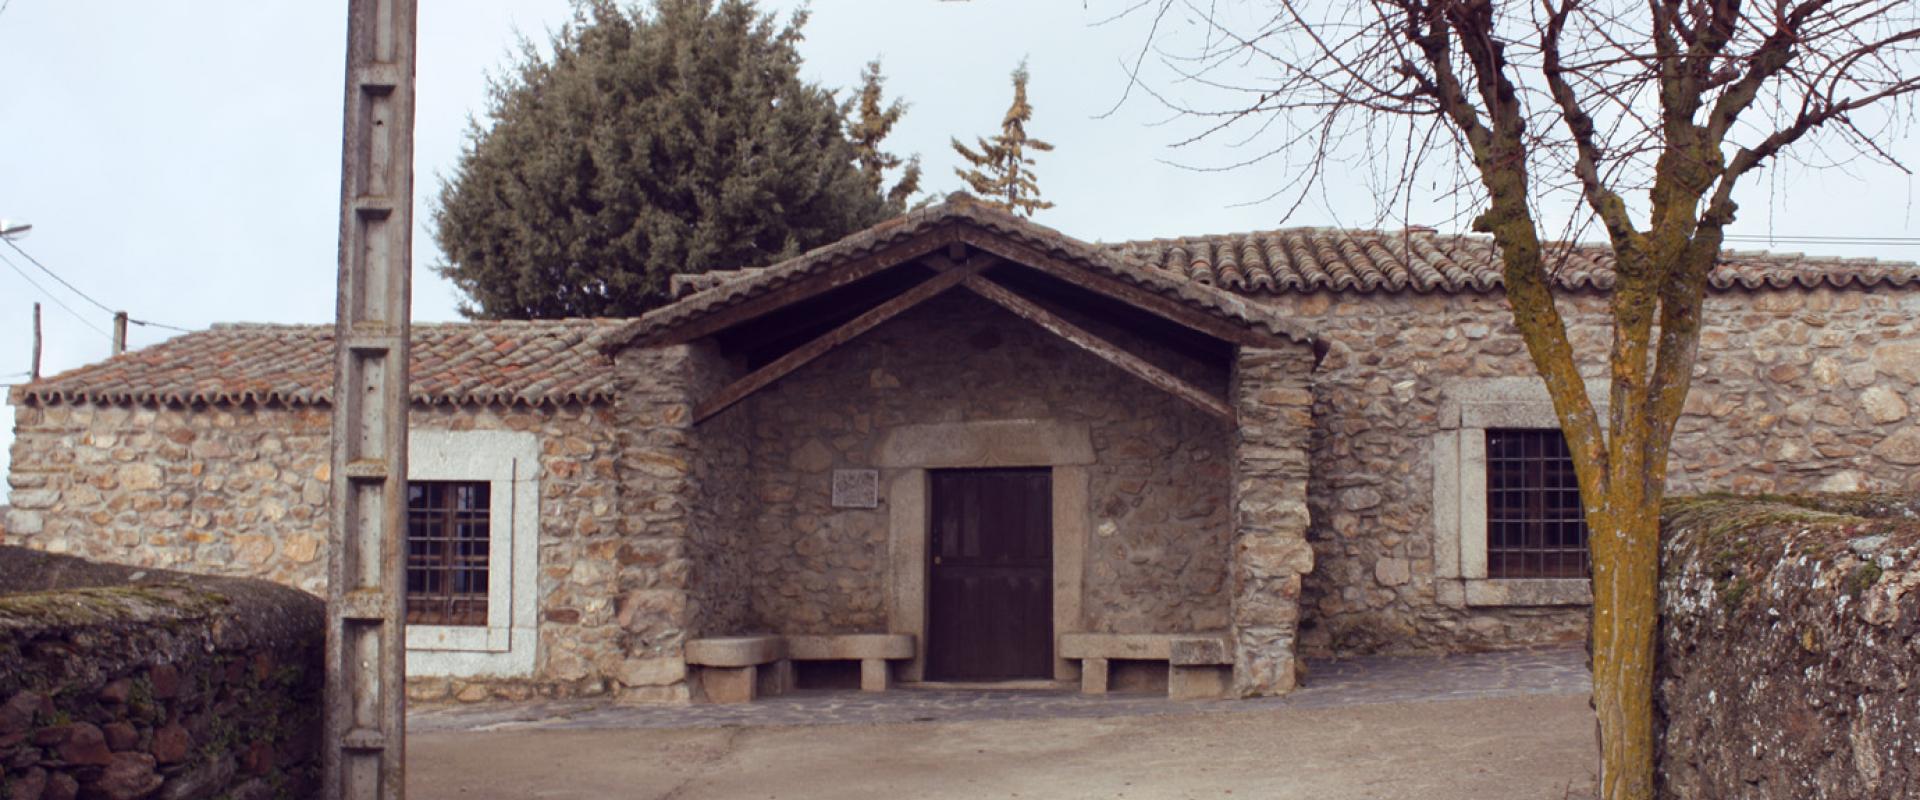 House-museum of Gabriel y Galán in Frades de la Sierra